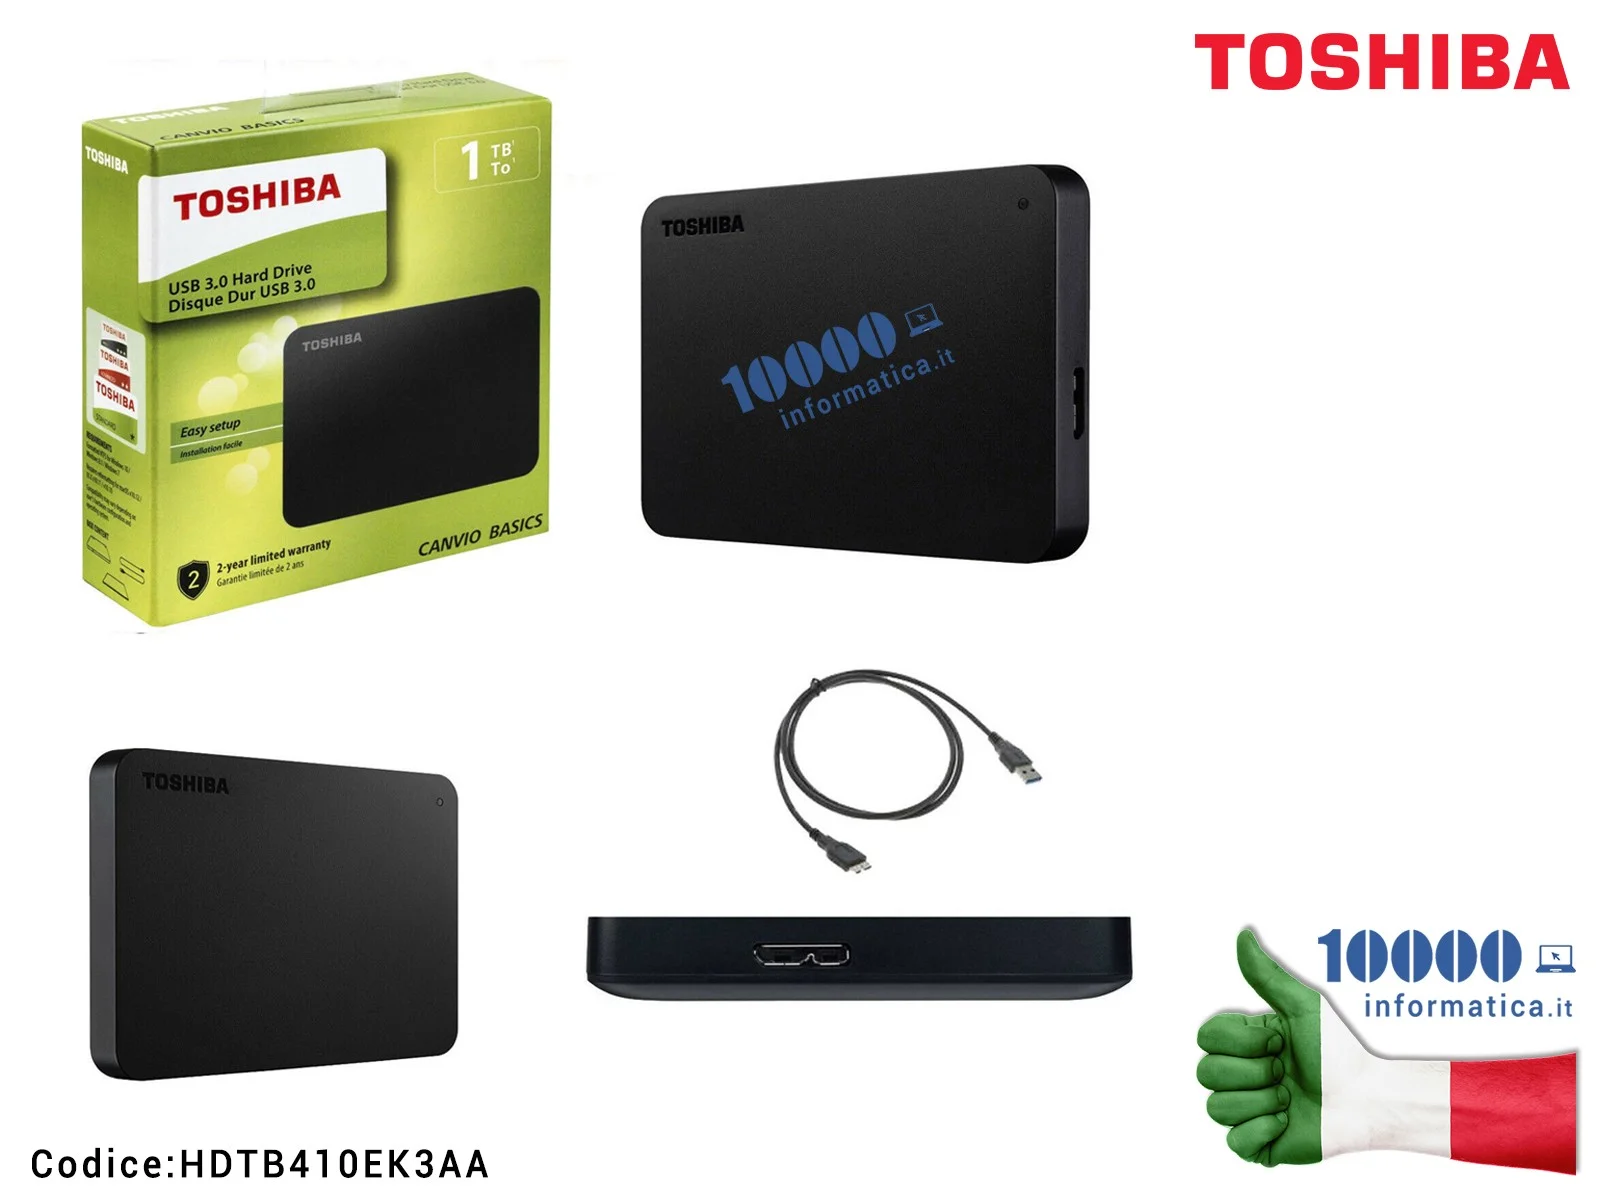 HDTB410EK3AA Hard Disk Esterno TOSHIBA USB 3.0 1 TB 2,5'' AUTOALIMENTATO 1000 GB TOSHIBA HDTB410EK3AA CANVIO BASICS